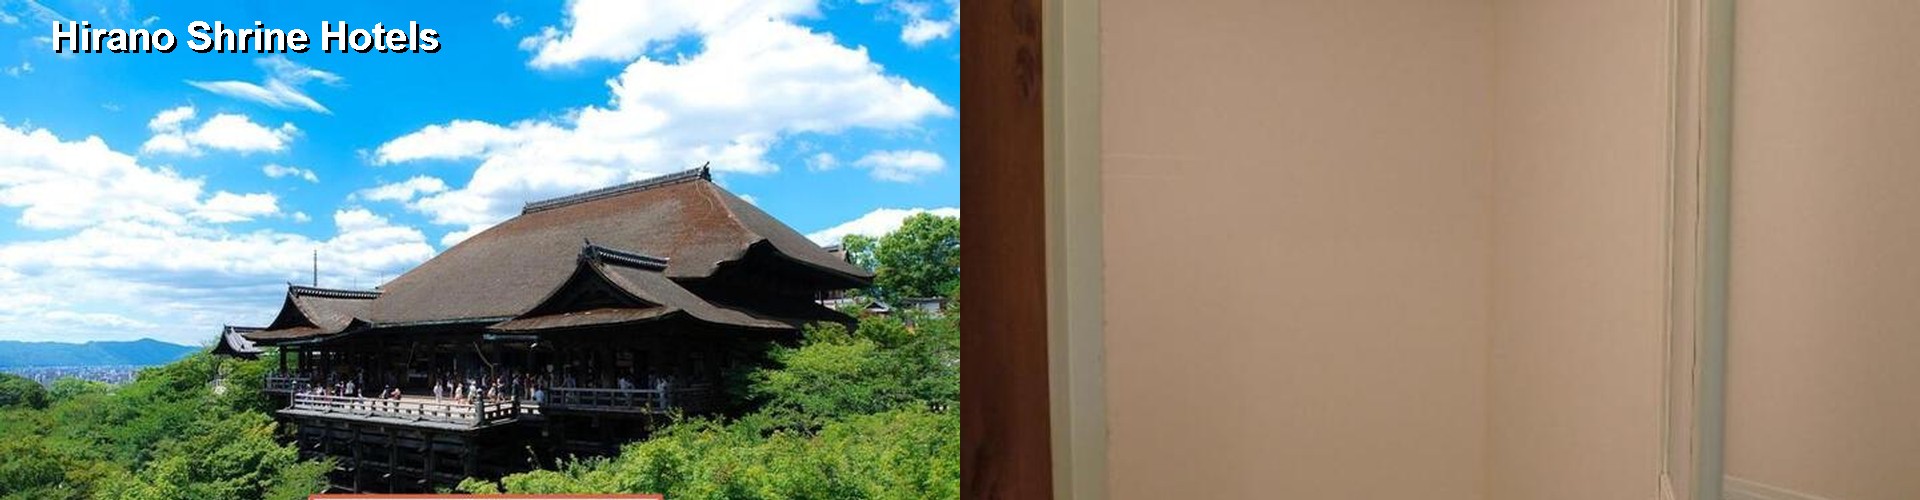 4 Best Hotels near Hirano Shrine